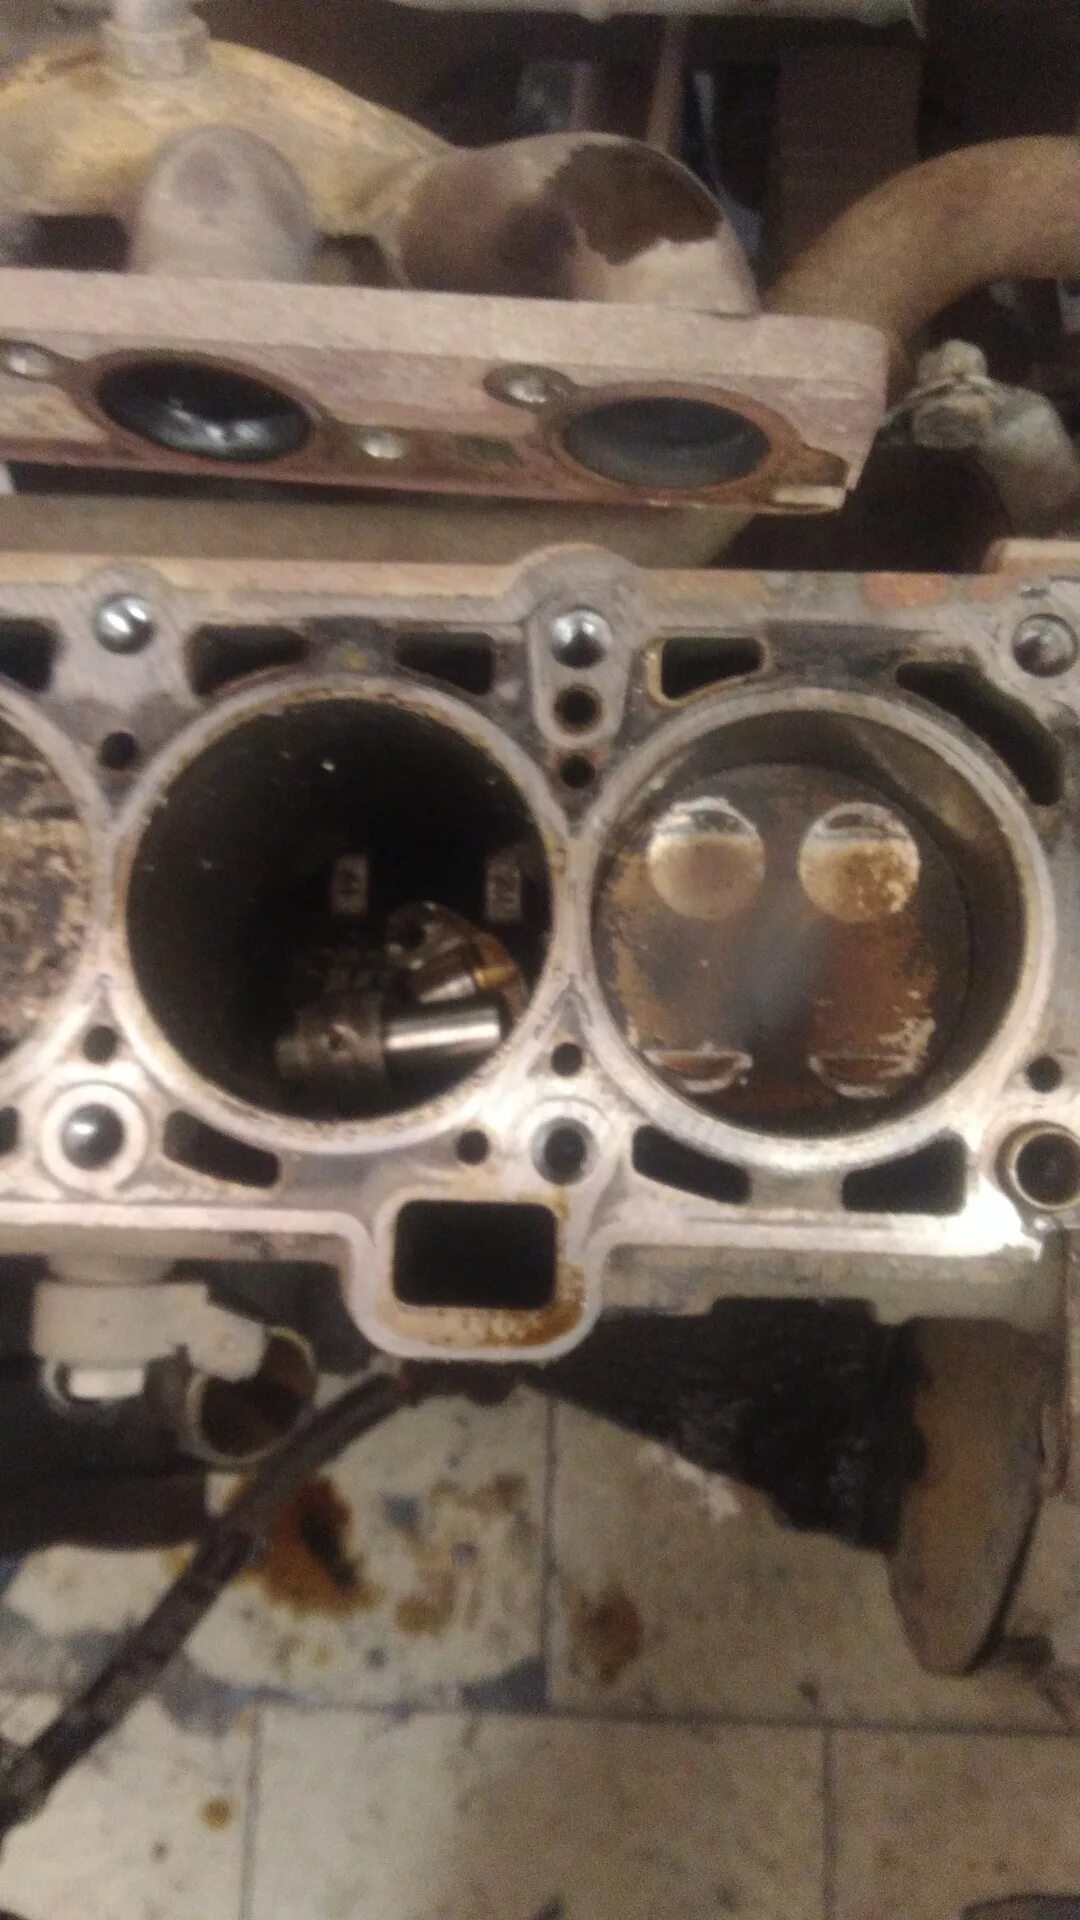 Двигатель Гранта 8 клапанов 11186 гнет ли клапана. Погнуло клапана Гранта 8 клапанная. Загнуло клапана Приора 16 клапанов. Погнуло клапана Гранта 8 клап. Гранта 16 клапанов гнет ли клапана